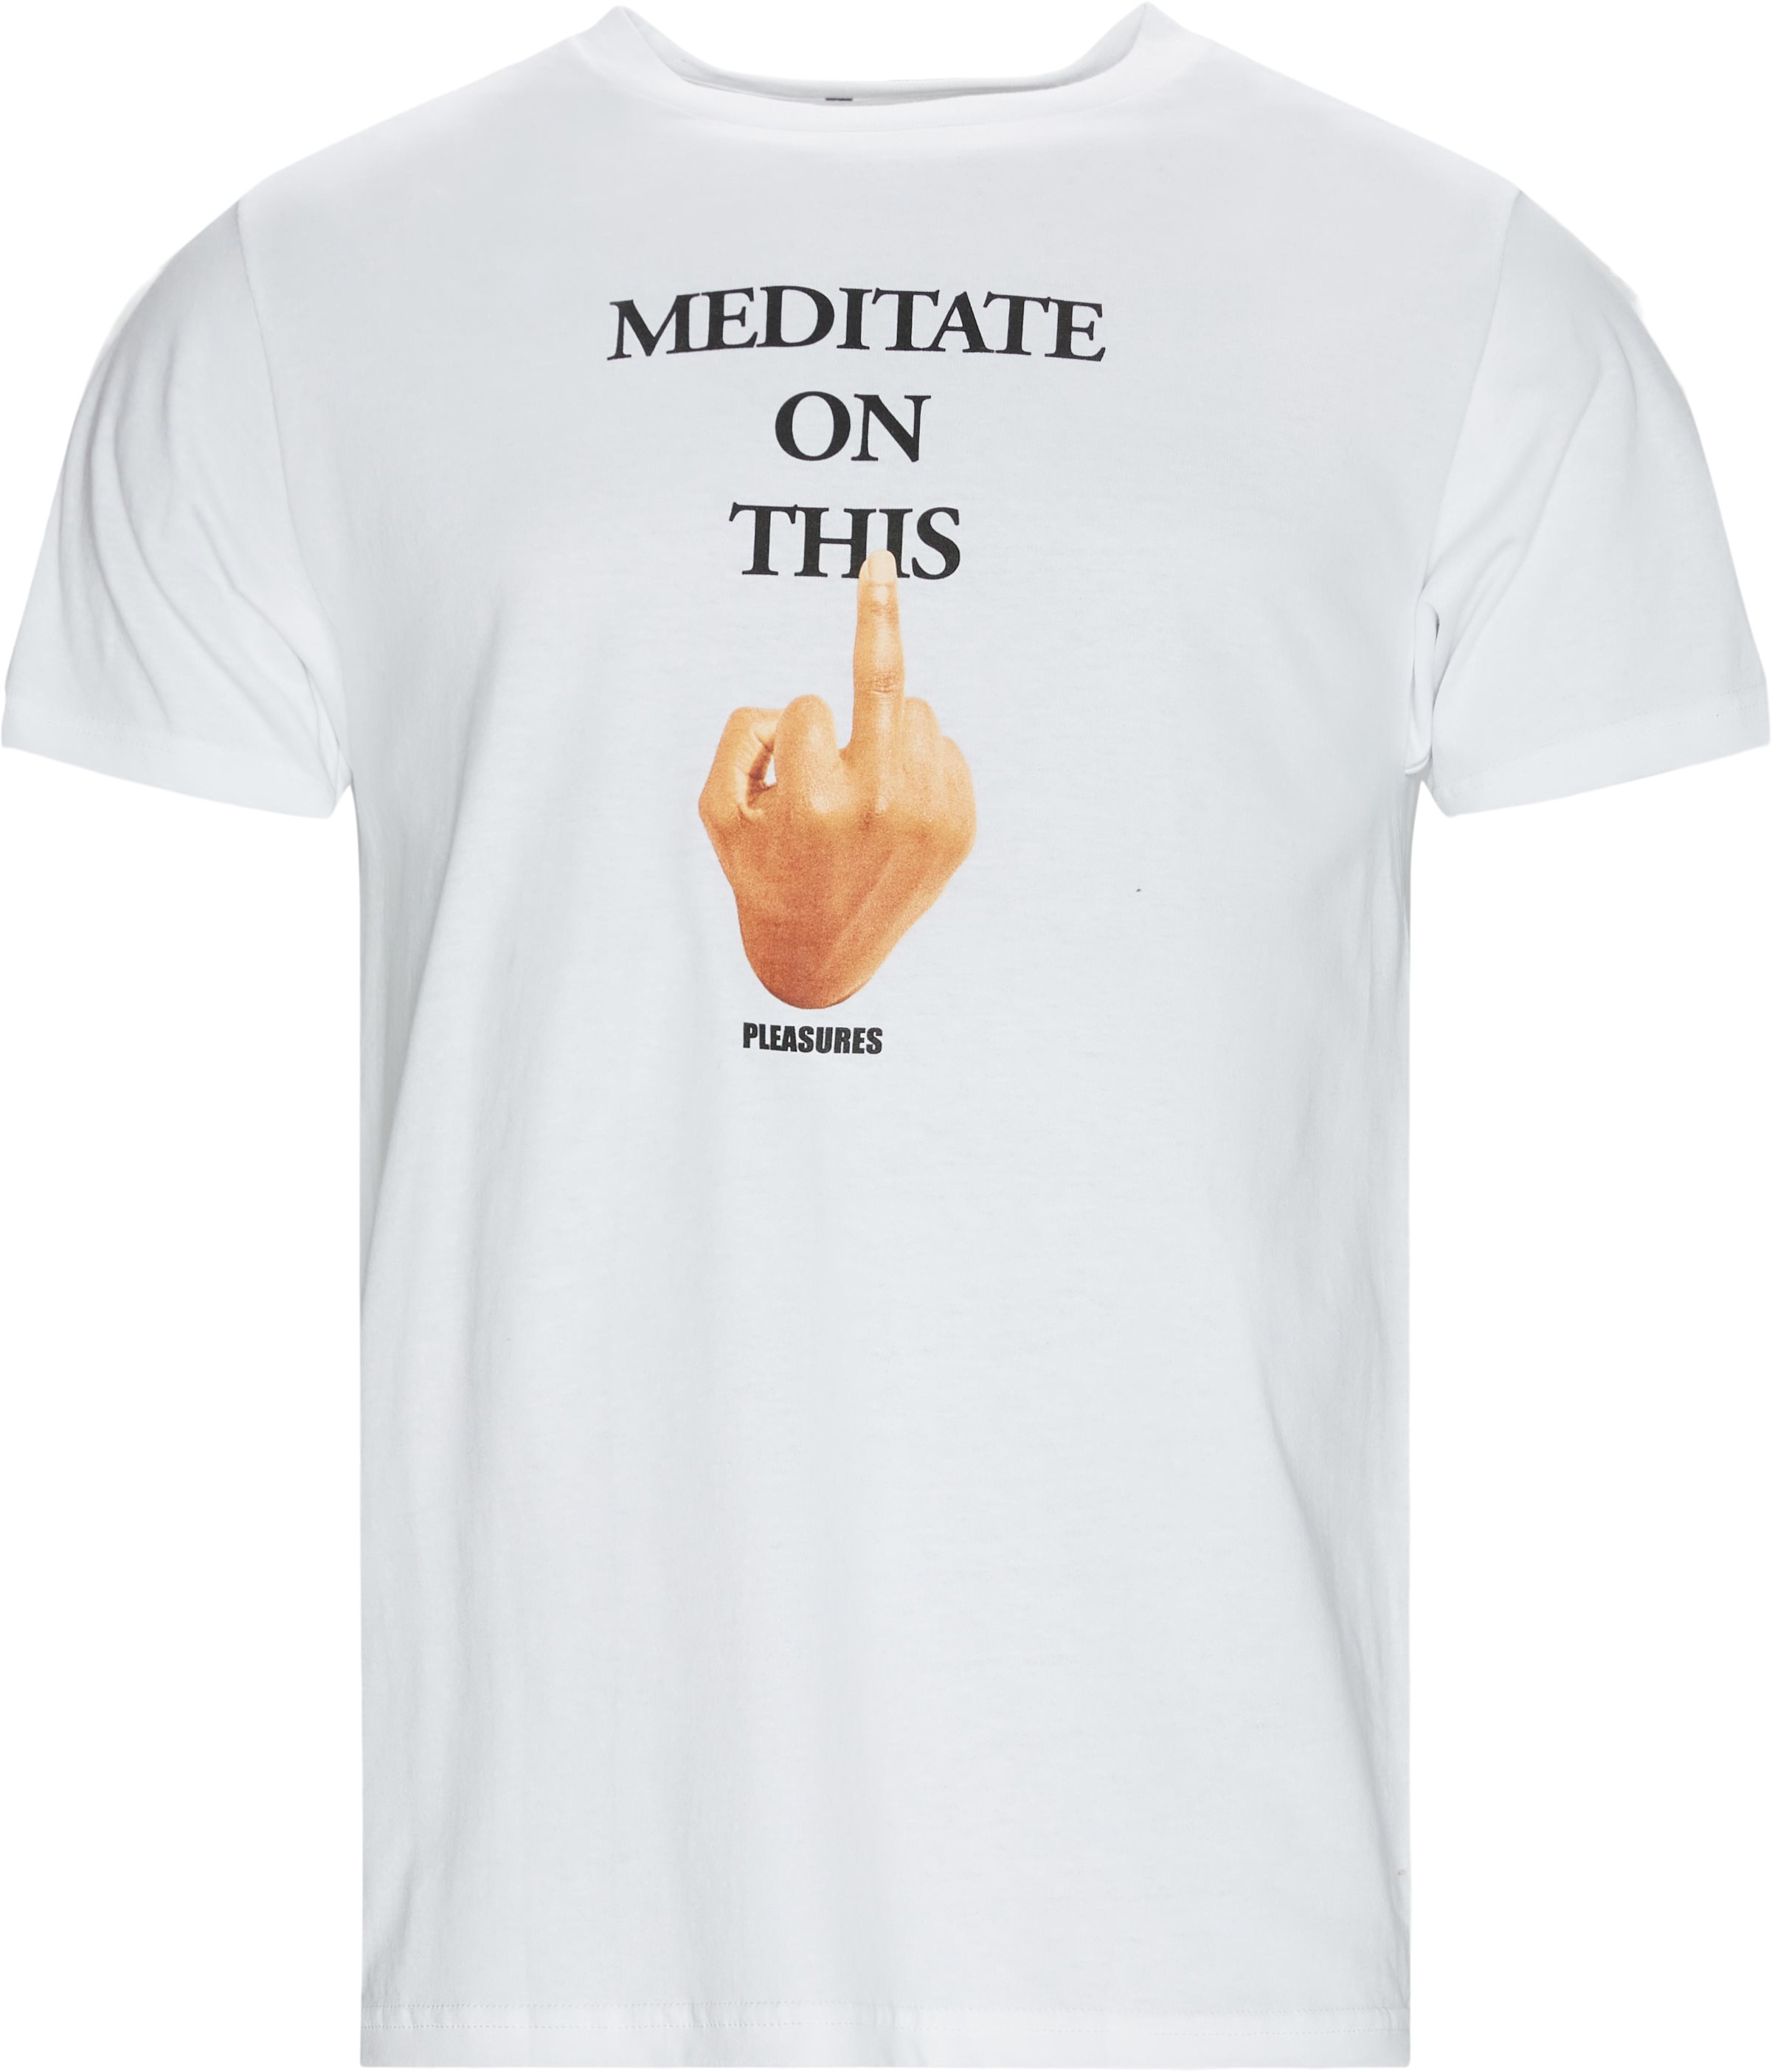 Message Tee - T-shirts - Regular fit - Vit